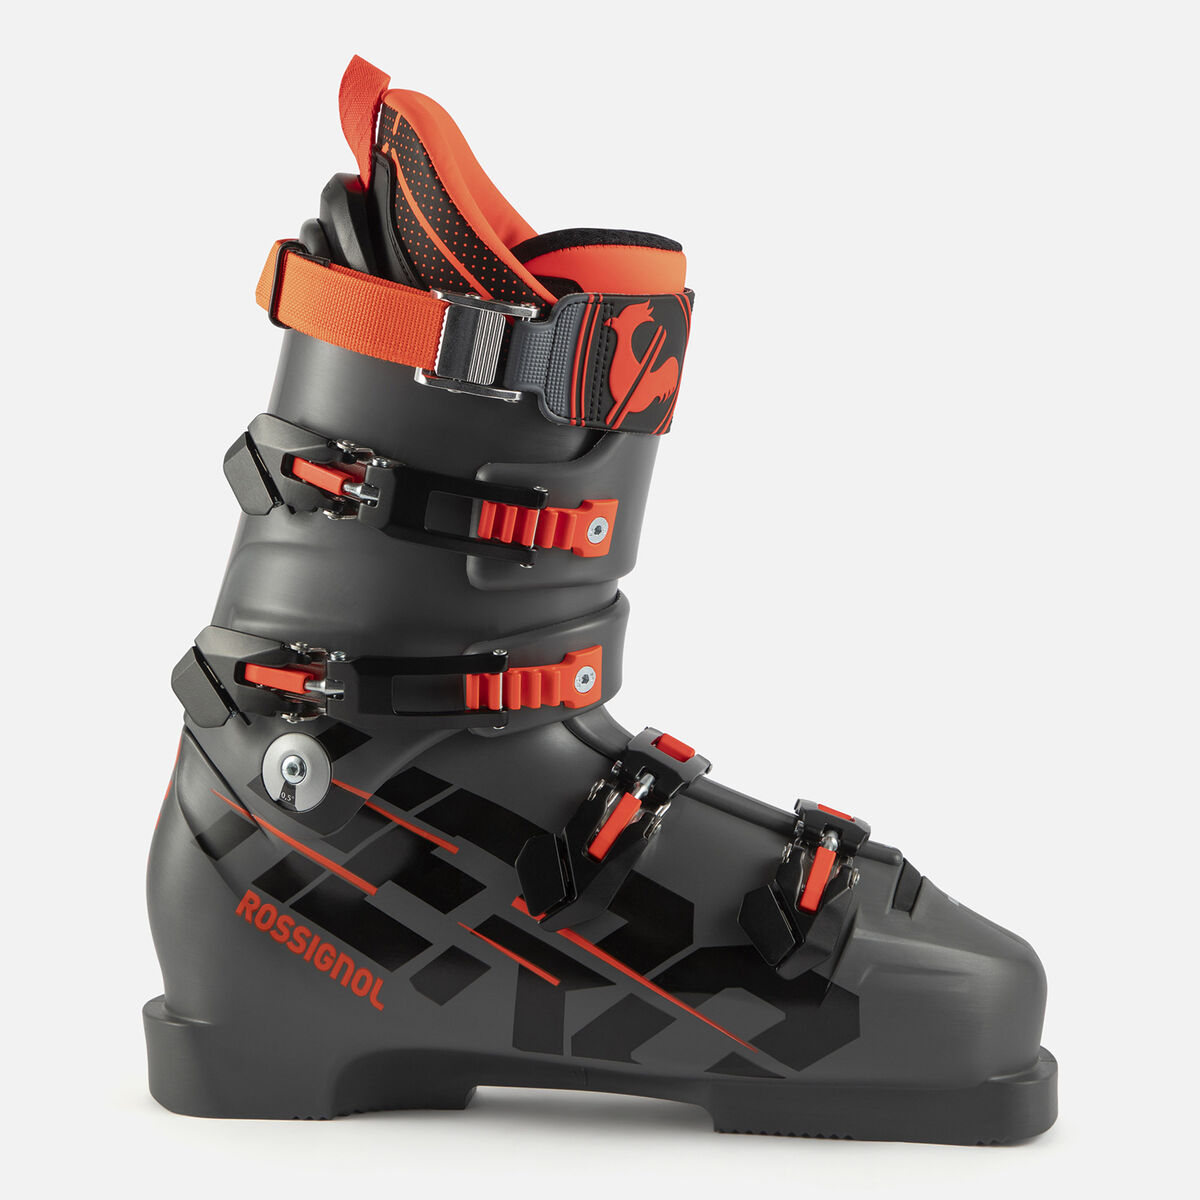 Chaussures de ski Racing unisexe Hero World Cup Zc